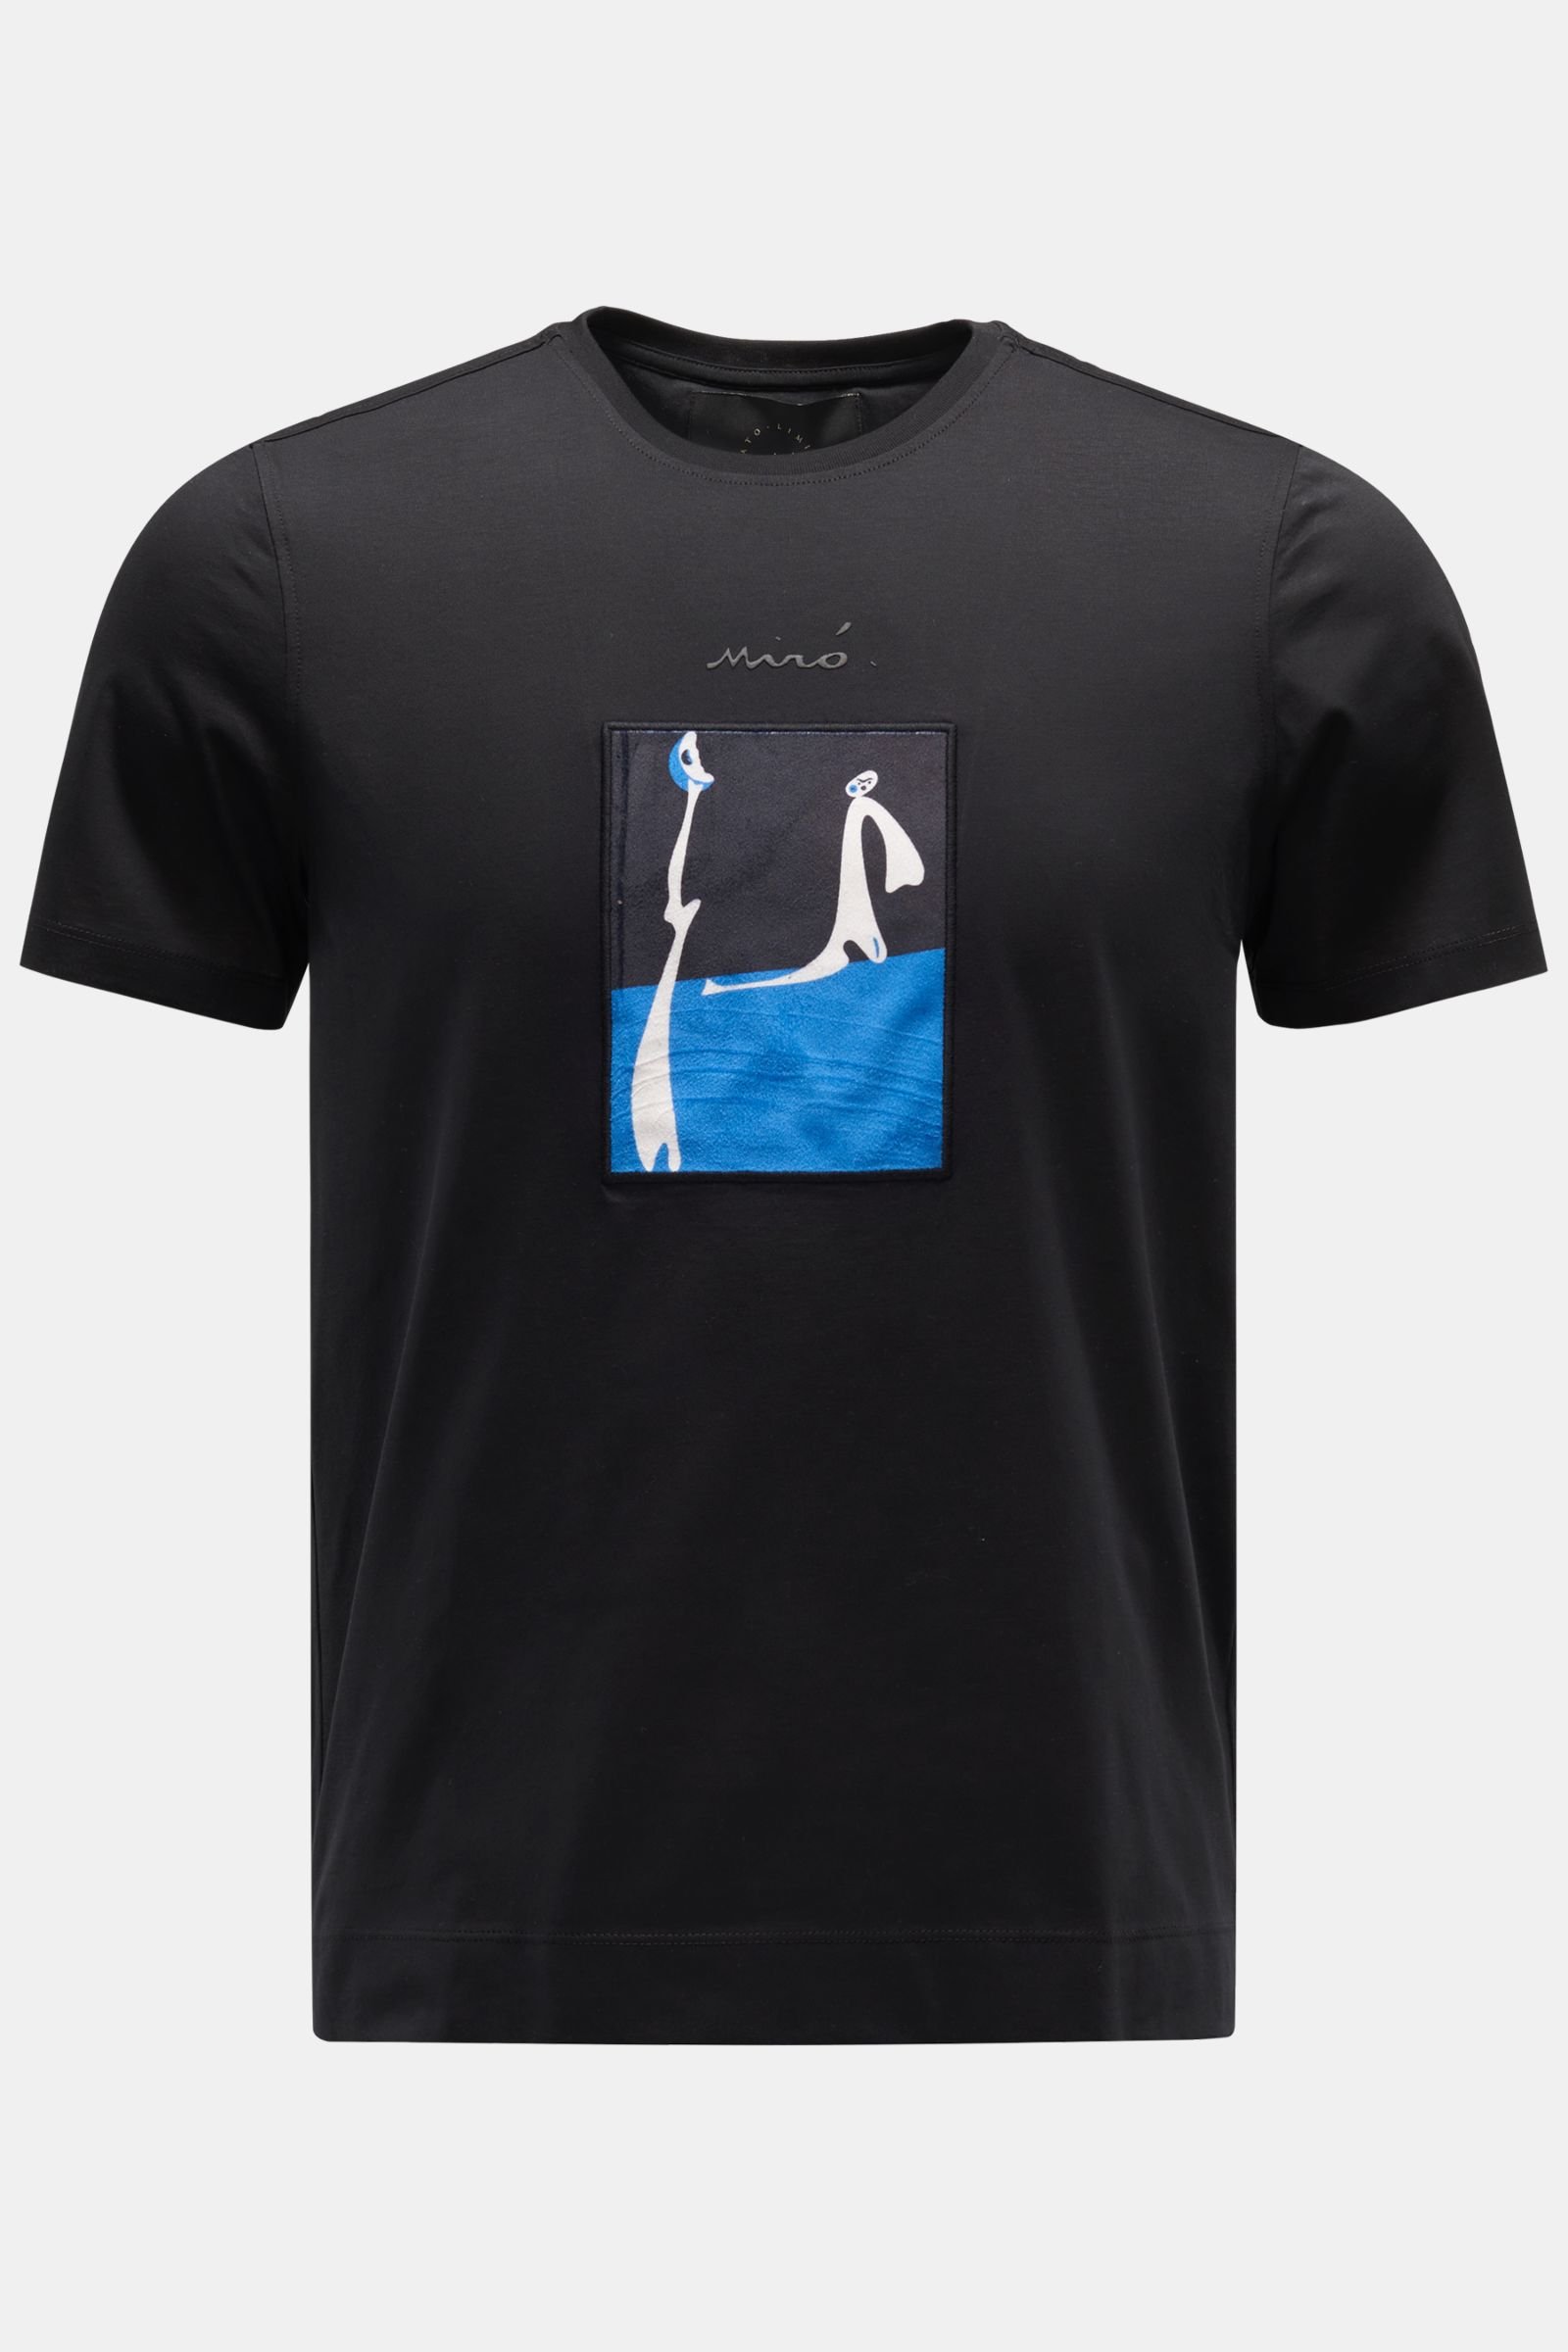 Crew neck T-shirt 'Cahiers D'art' black